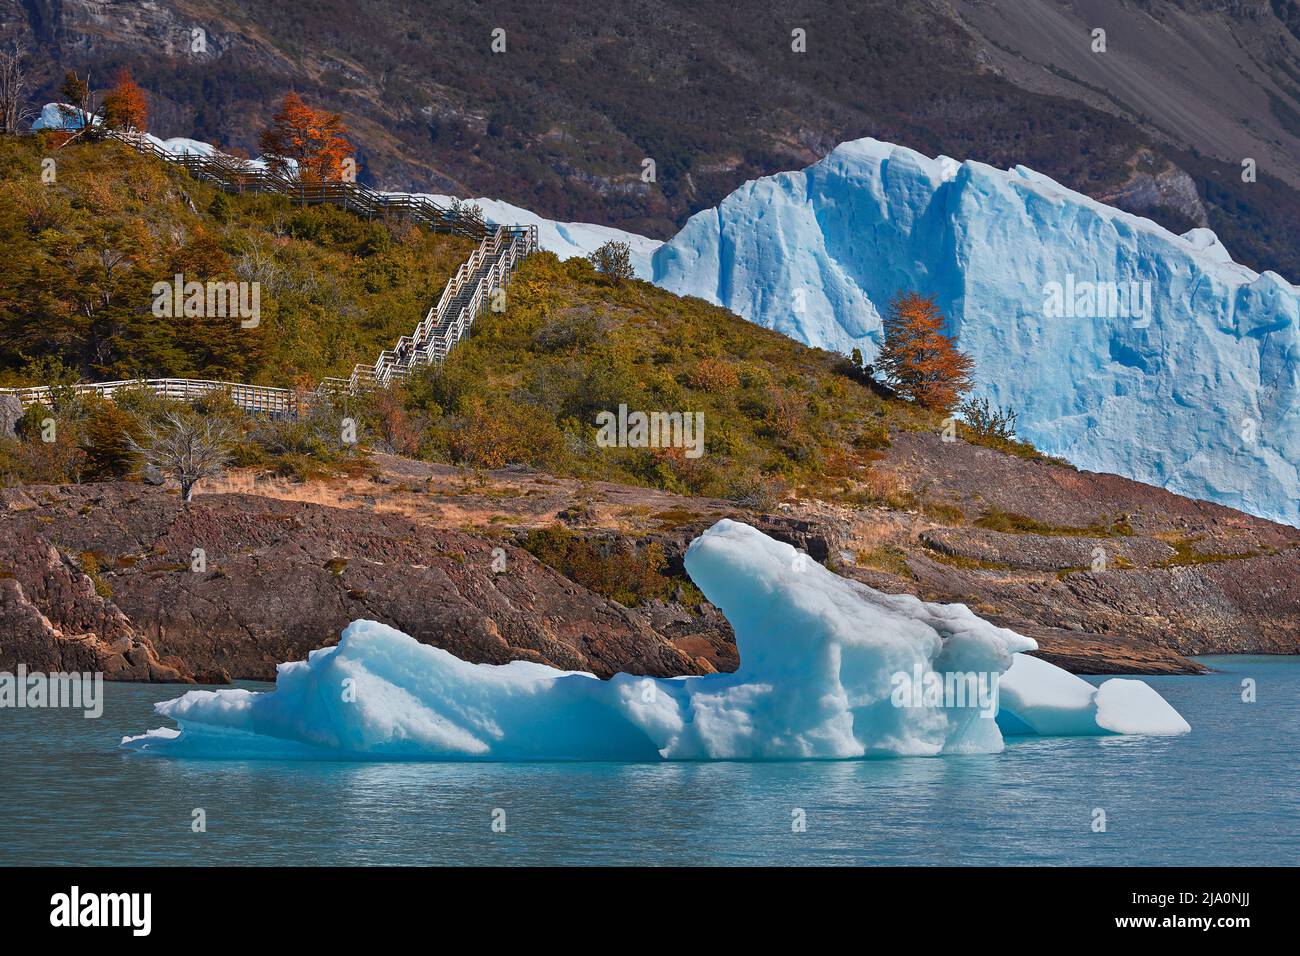 An Iceberg, colorful Lengas trees, and the blue icy wall of the Perito Moreno Glacier in autumn, Los Glaciares National Park, Santa Cruz, Argentina. Stock Photo